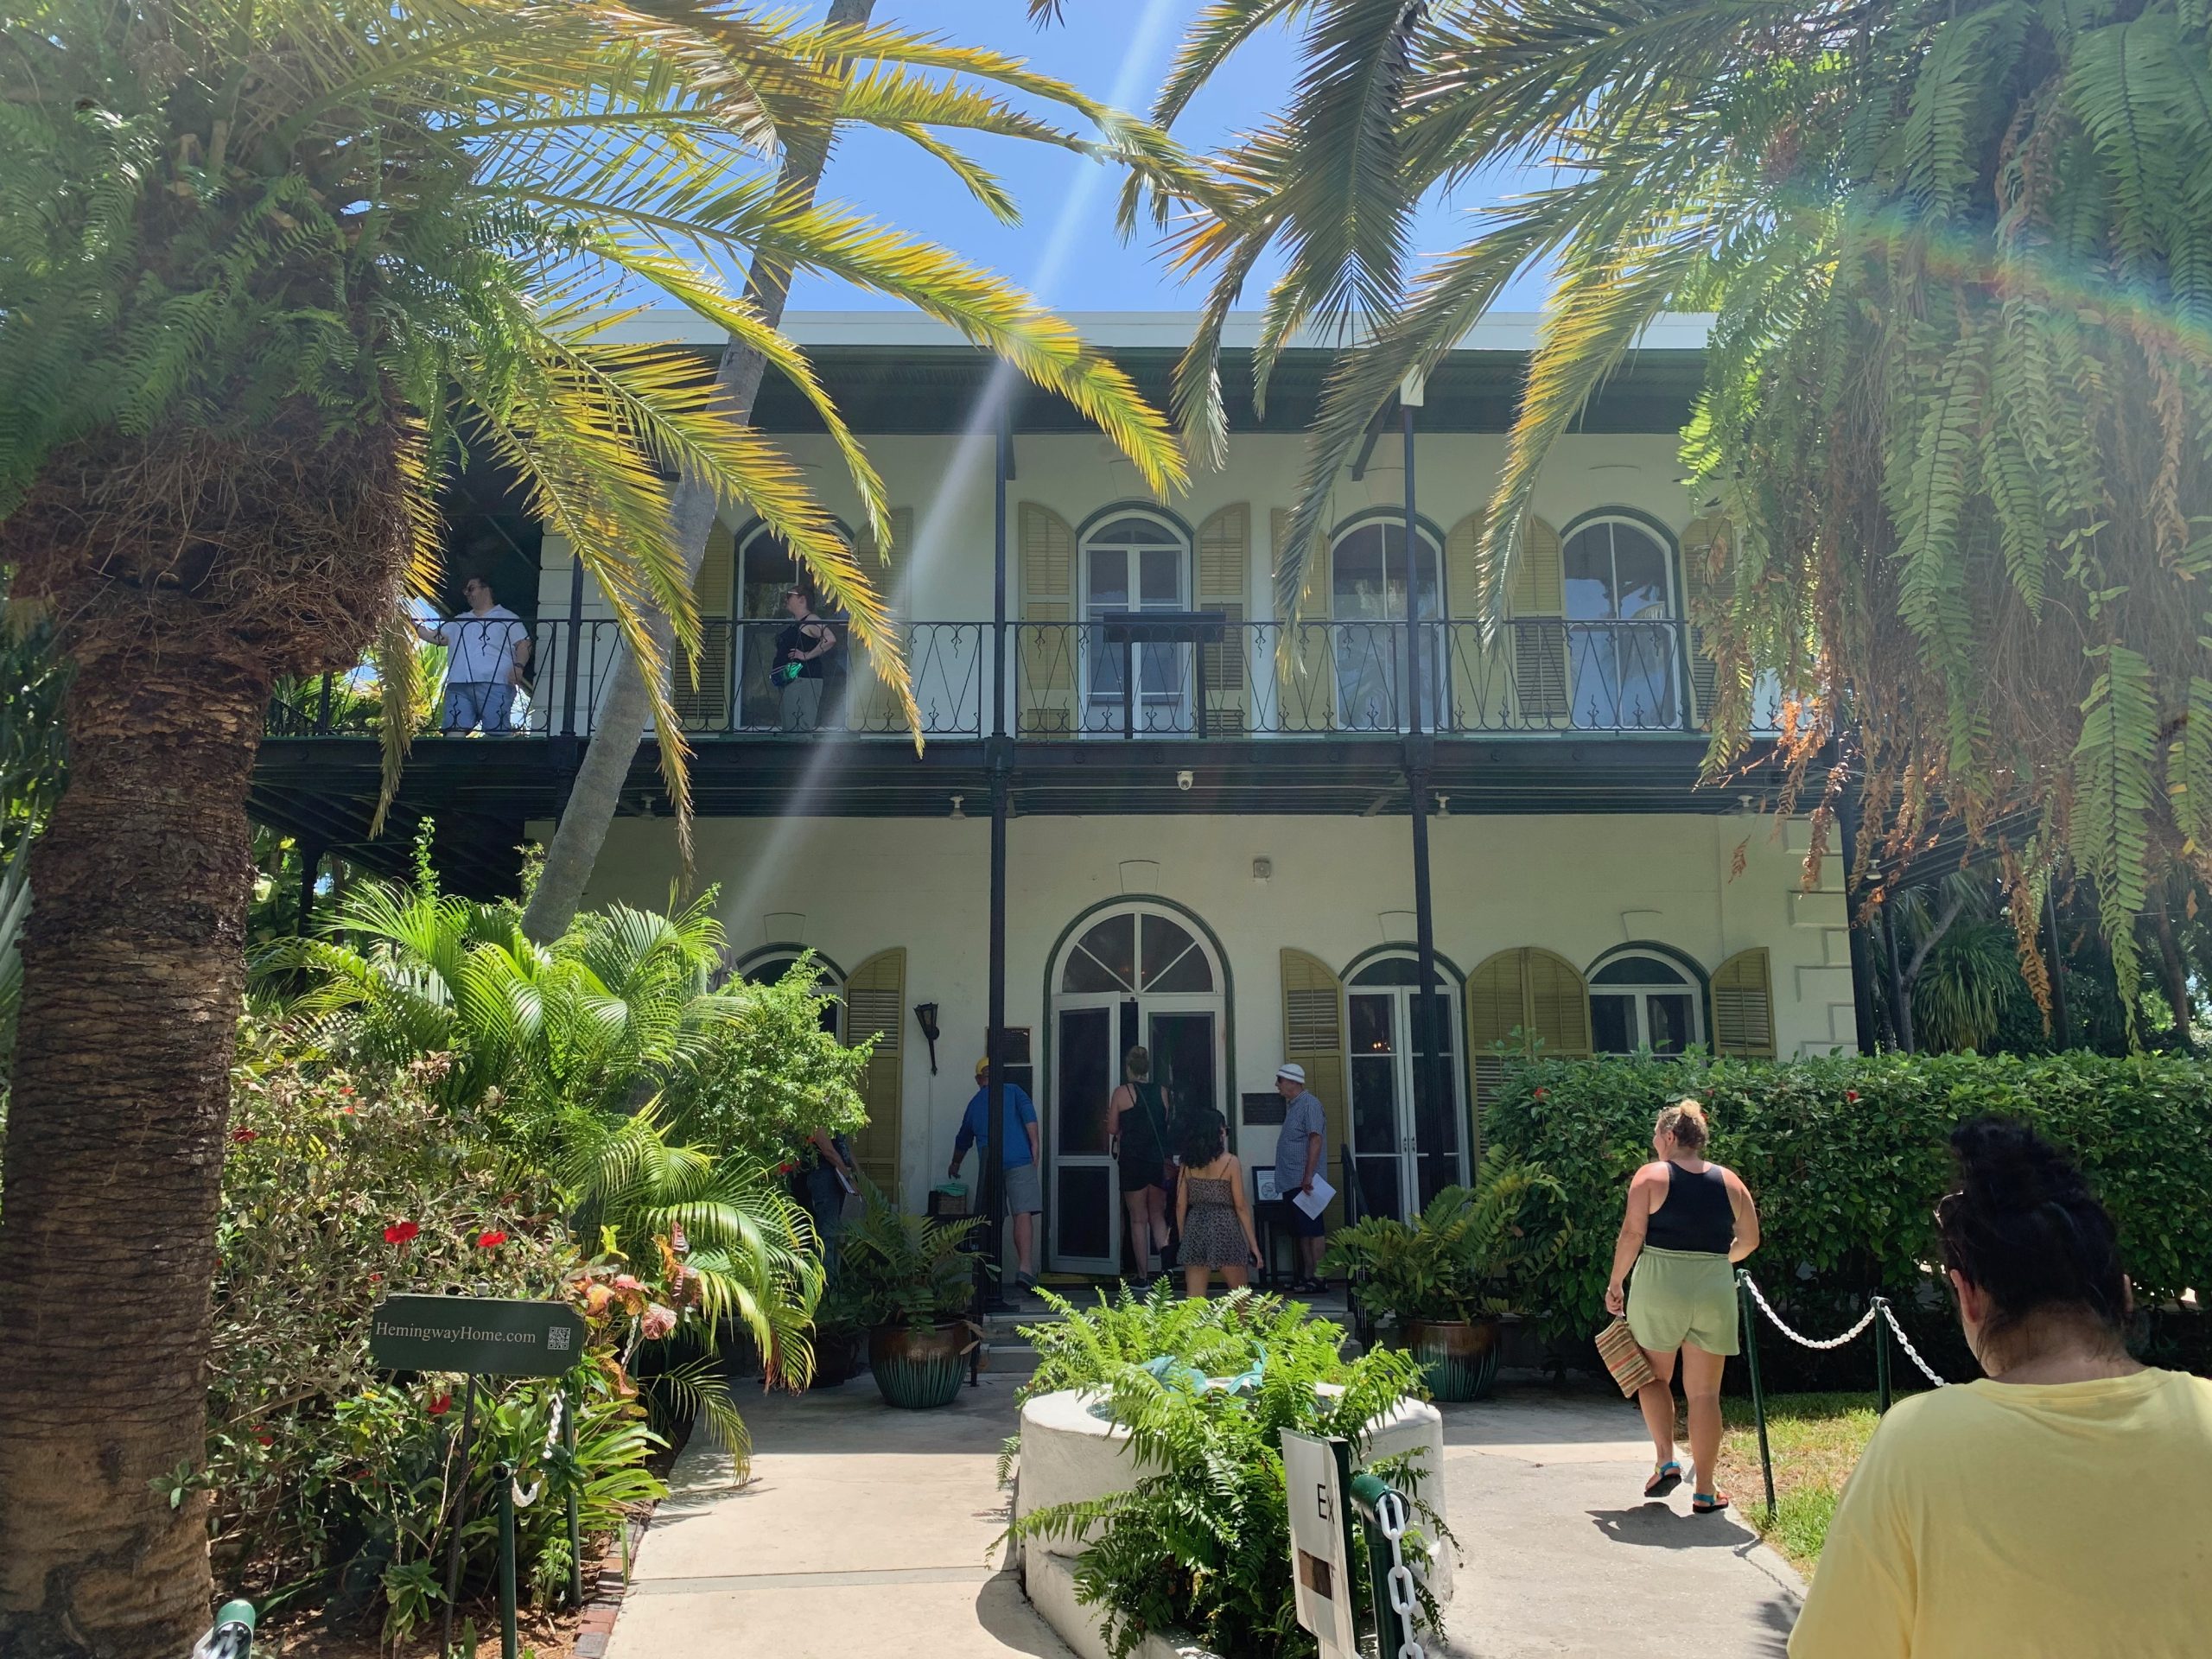 The Hemingway House in Key West